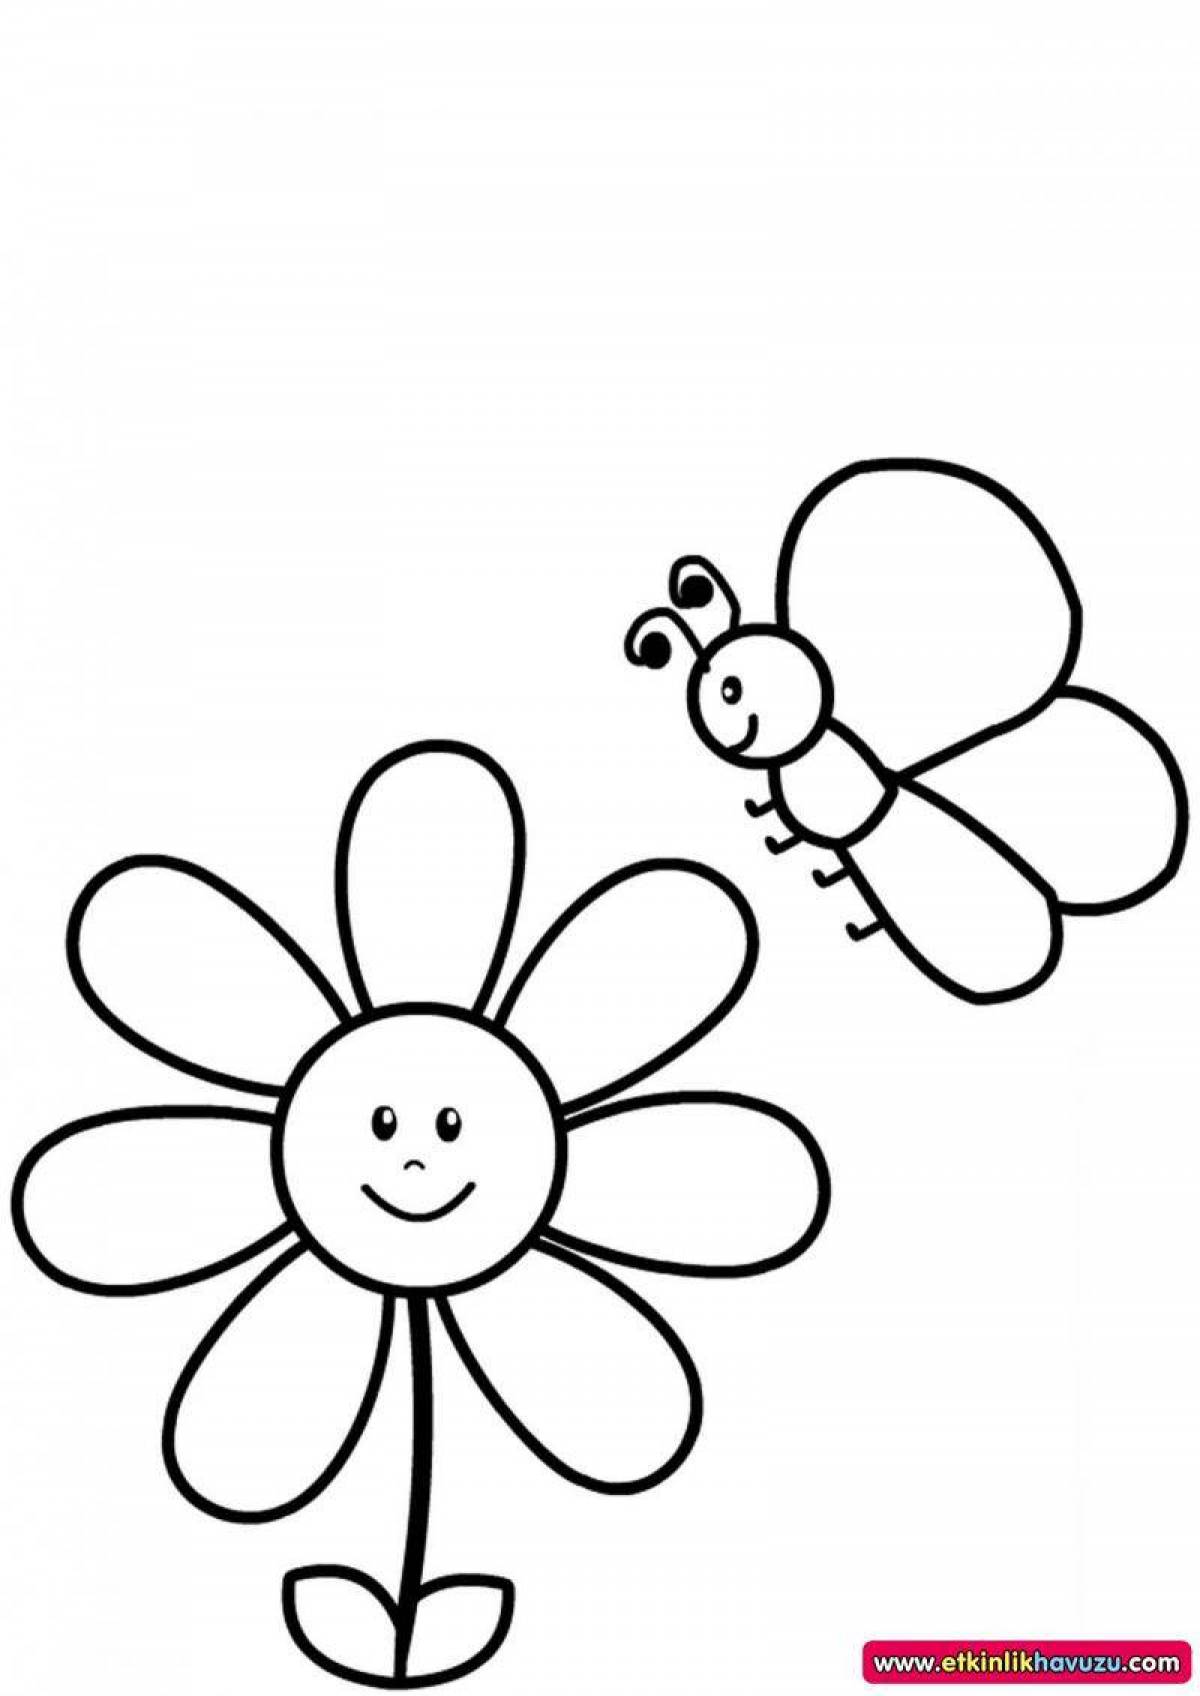 Яркая раскраска цветок для детей